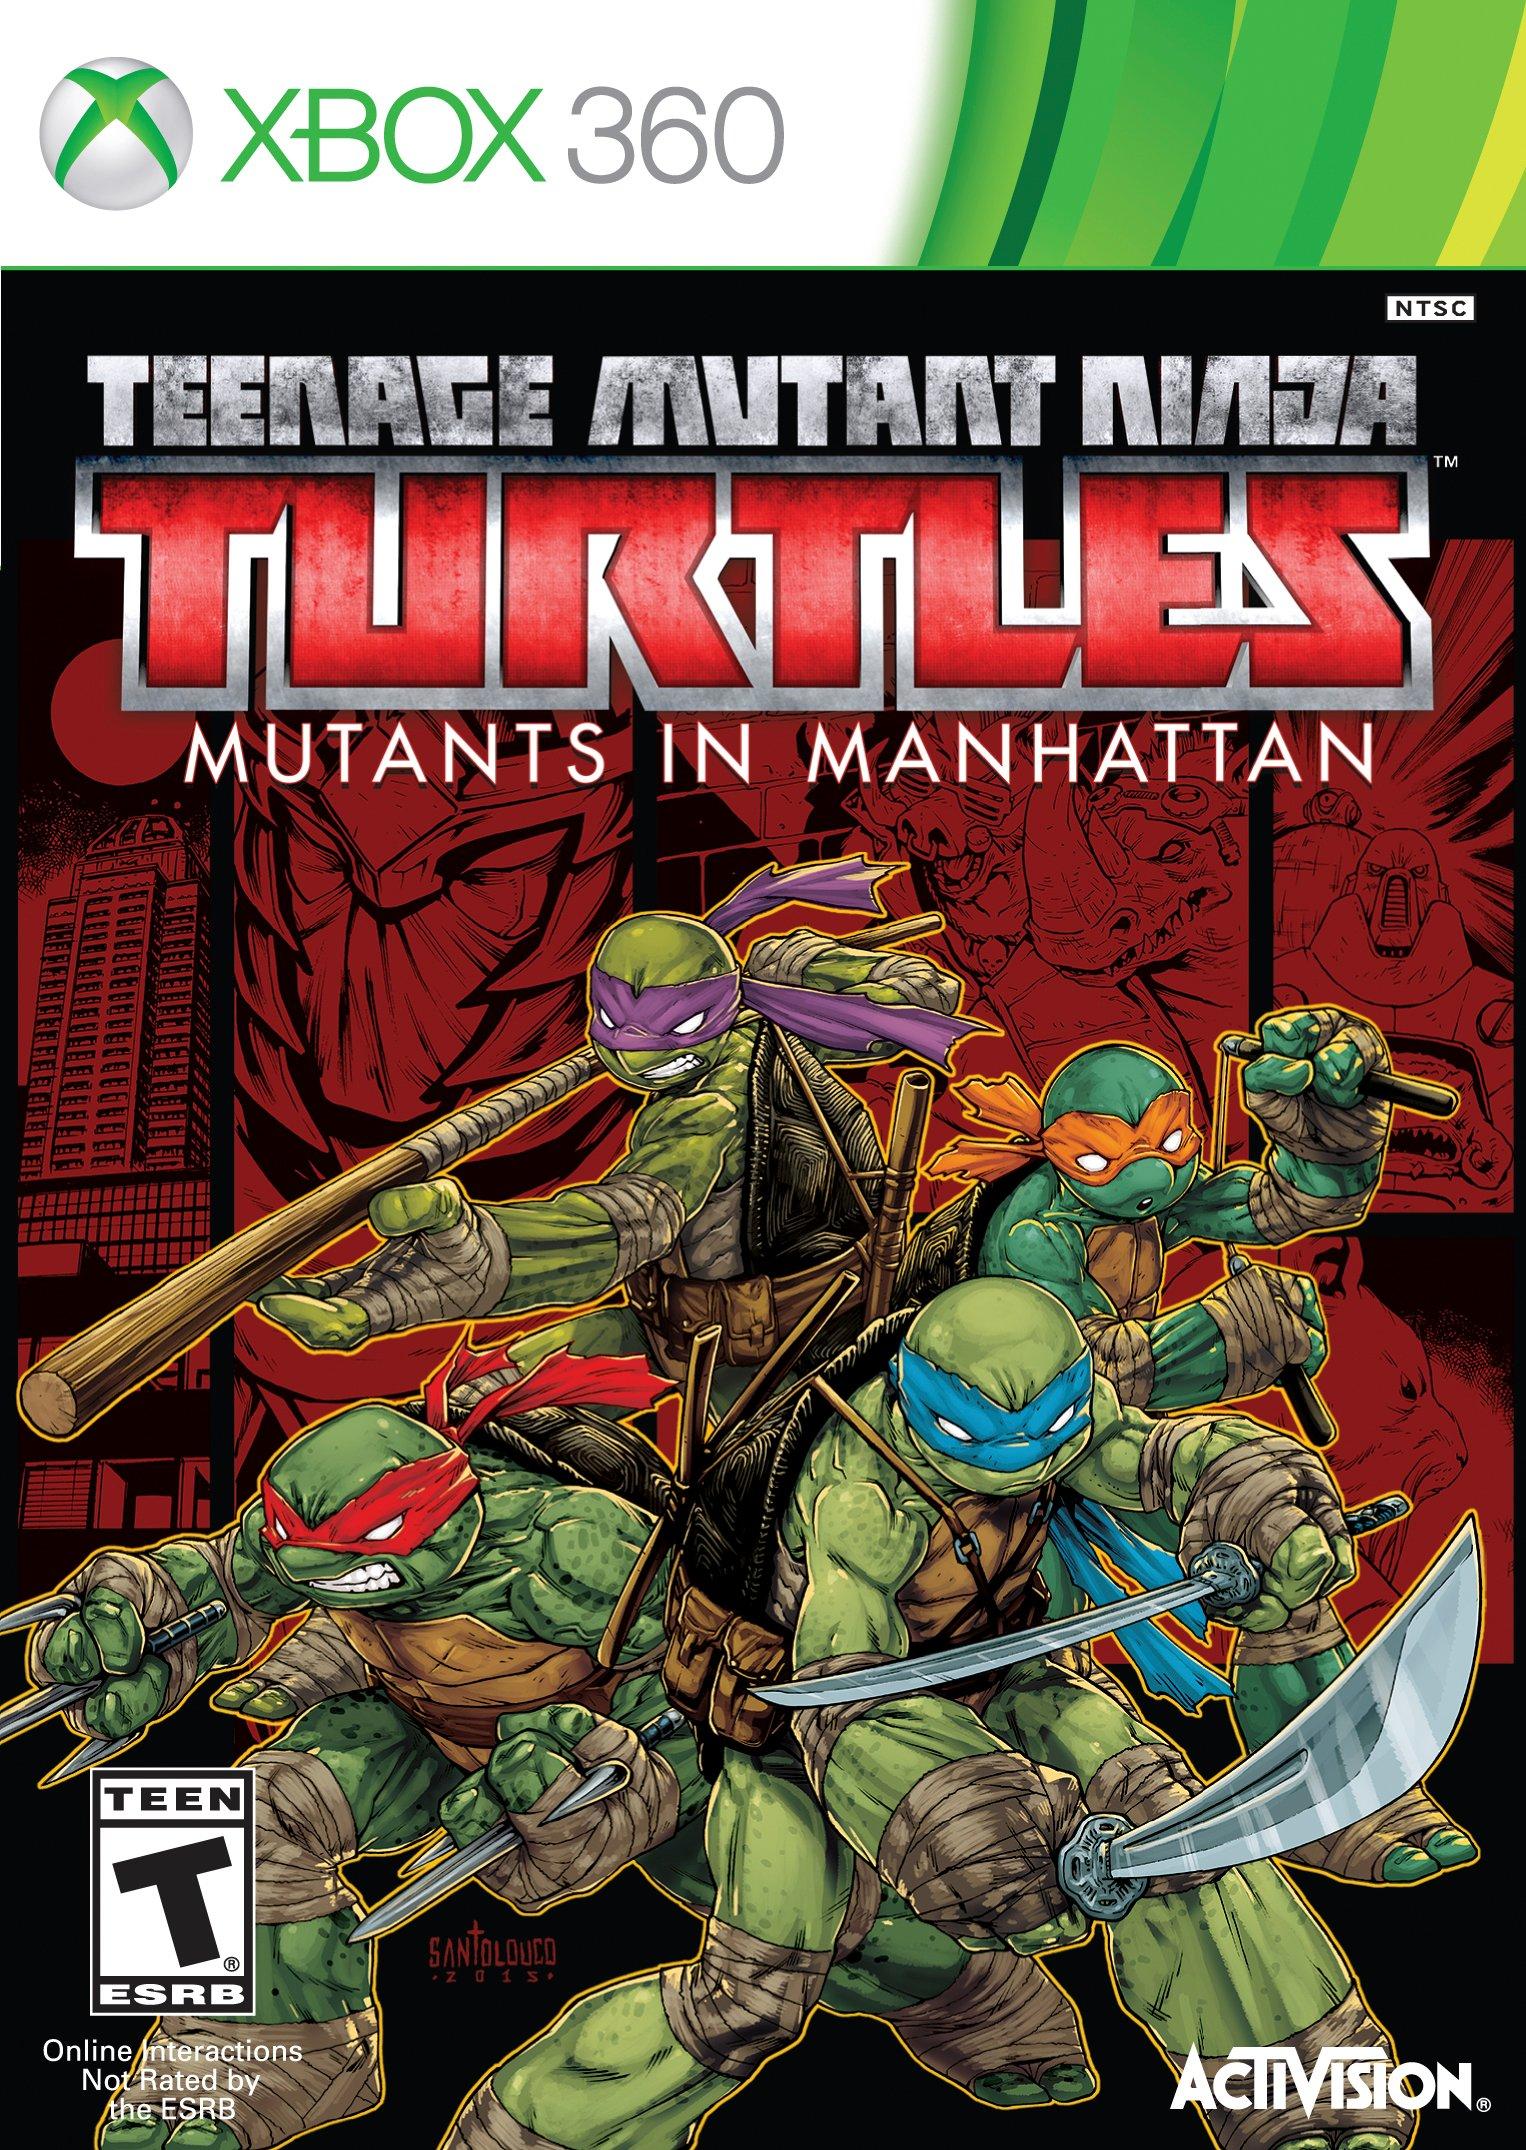 Tmnt manhattan. Teenage Mutant Ninja Turtles игра ps4. TMNT хбокс 360. TMNT Черепашки ниндзя игра диск. Тенедж МУТАНТ ниндзя турлес 3 игра ПС 3.